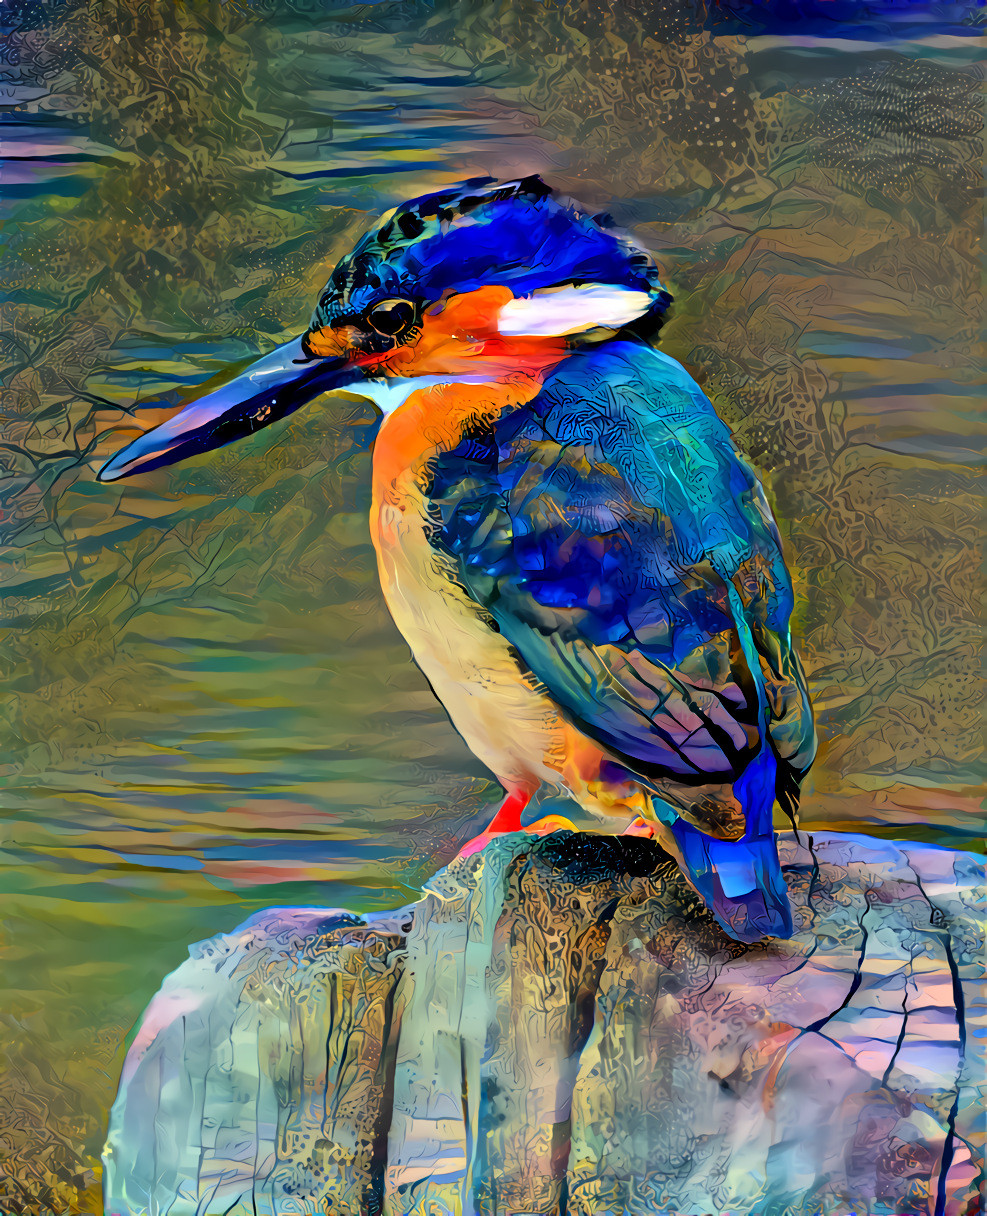 Kingfisher (Photo by Bob Brewer on Unsplash)